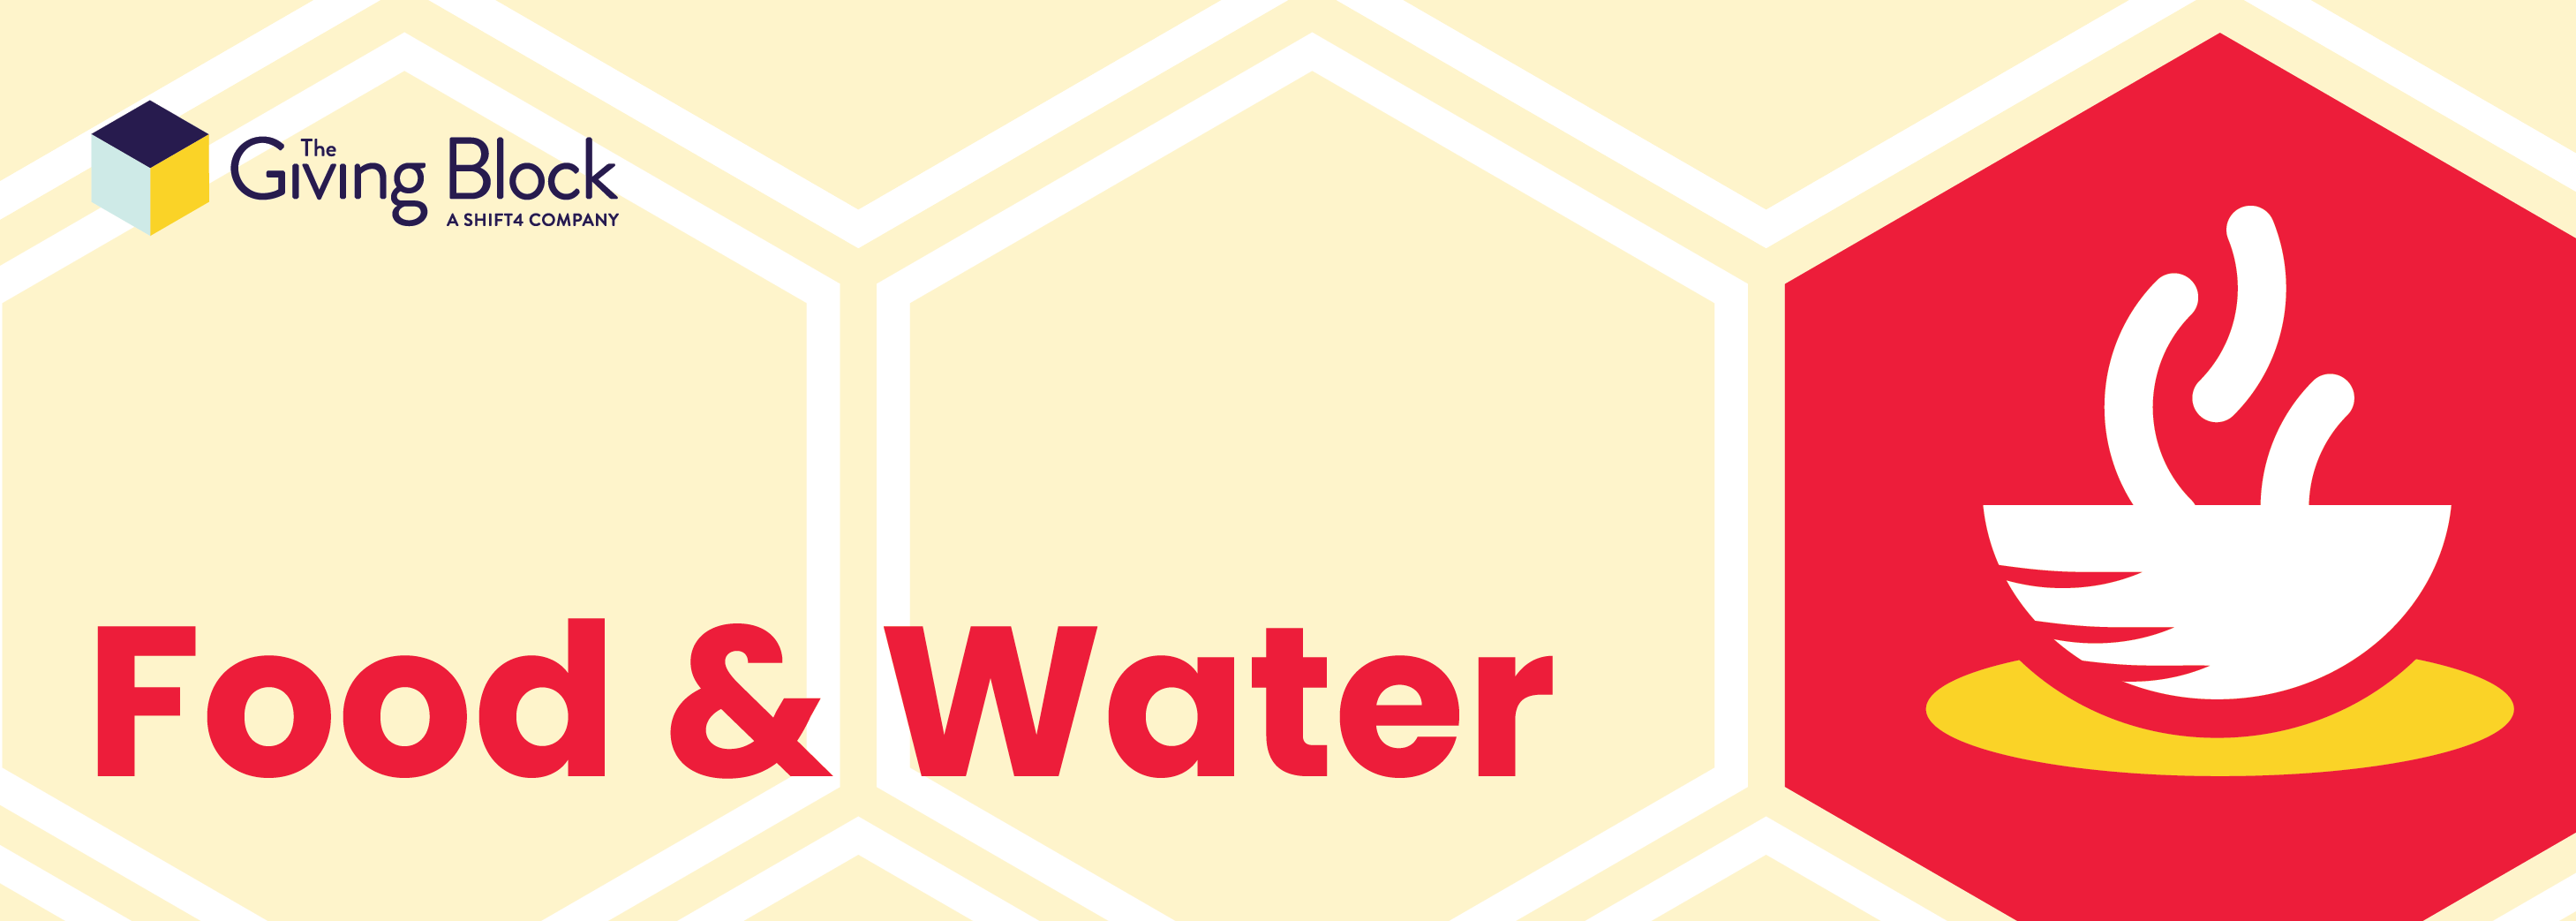 Header - Food Water | The Giving Block